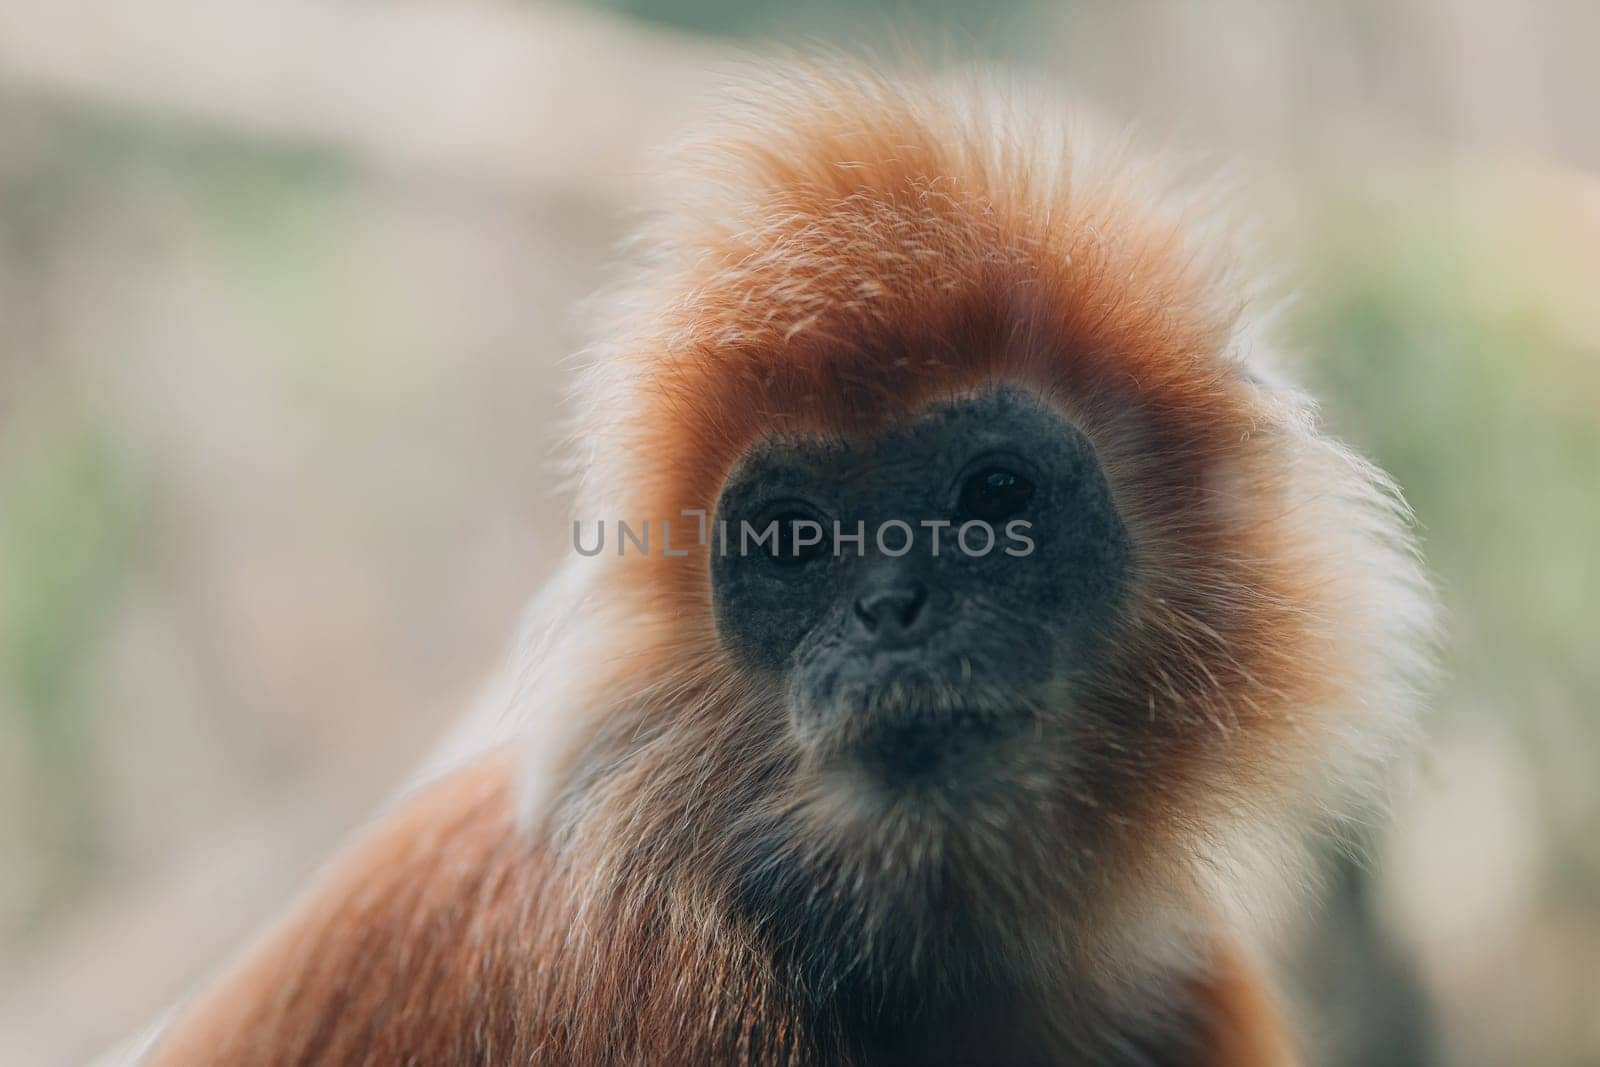 Close up shot of golden langur monkey species. Endangered monkey photo in zoo, cute fluffy ape face